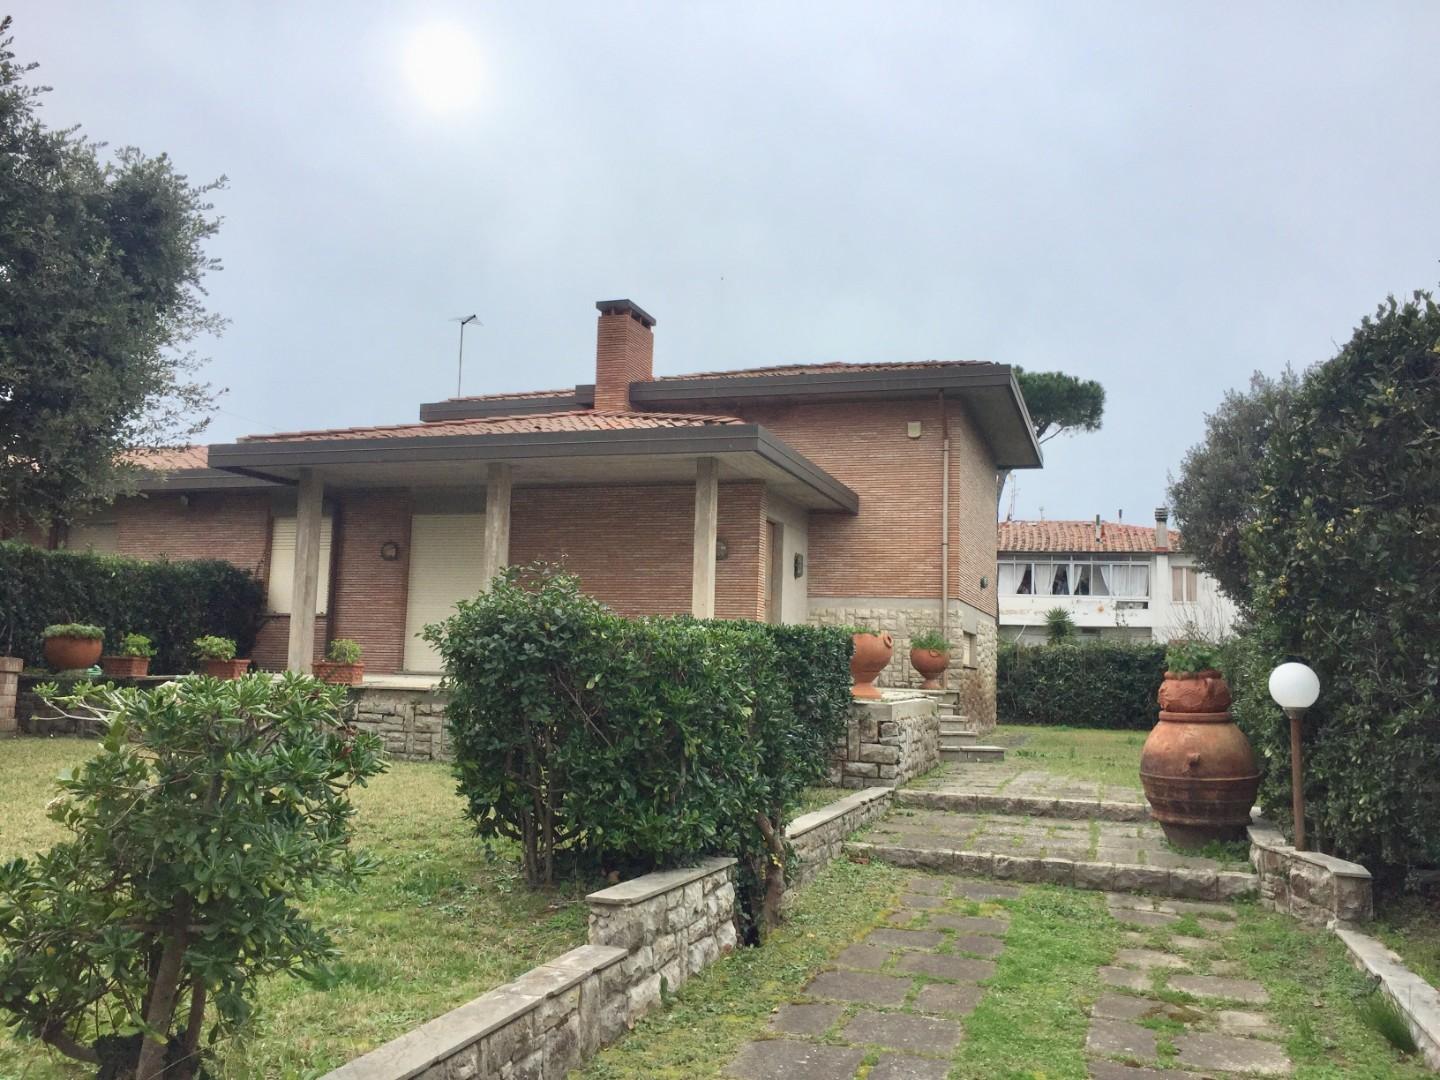 Villa Bifamiliare arredata in affitto, Pisa tirrenia